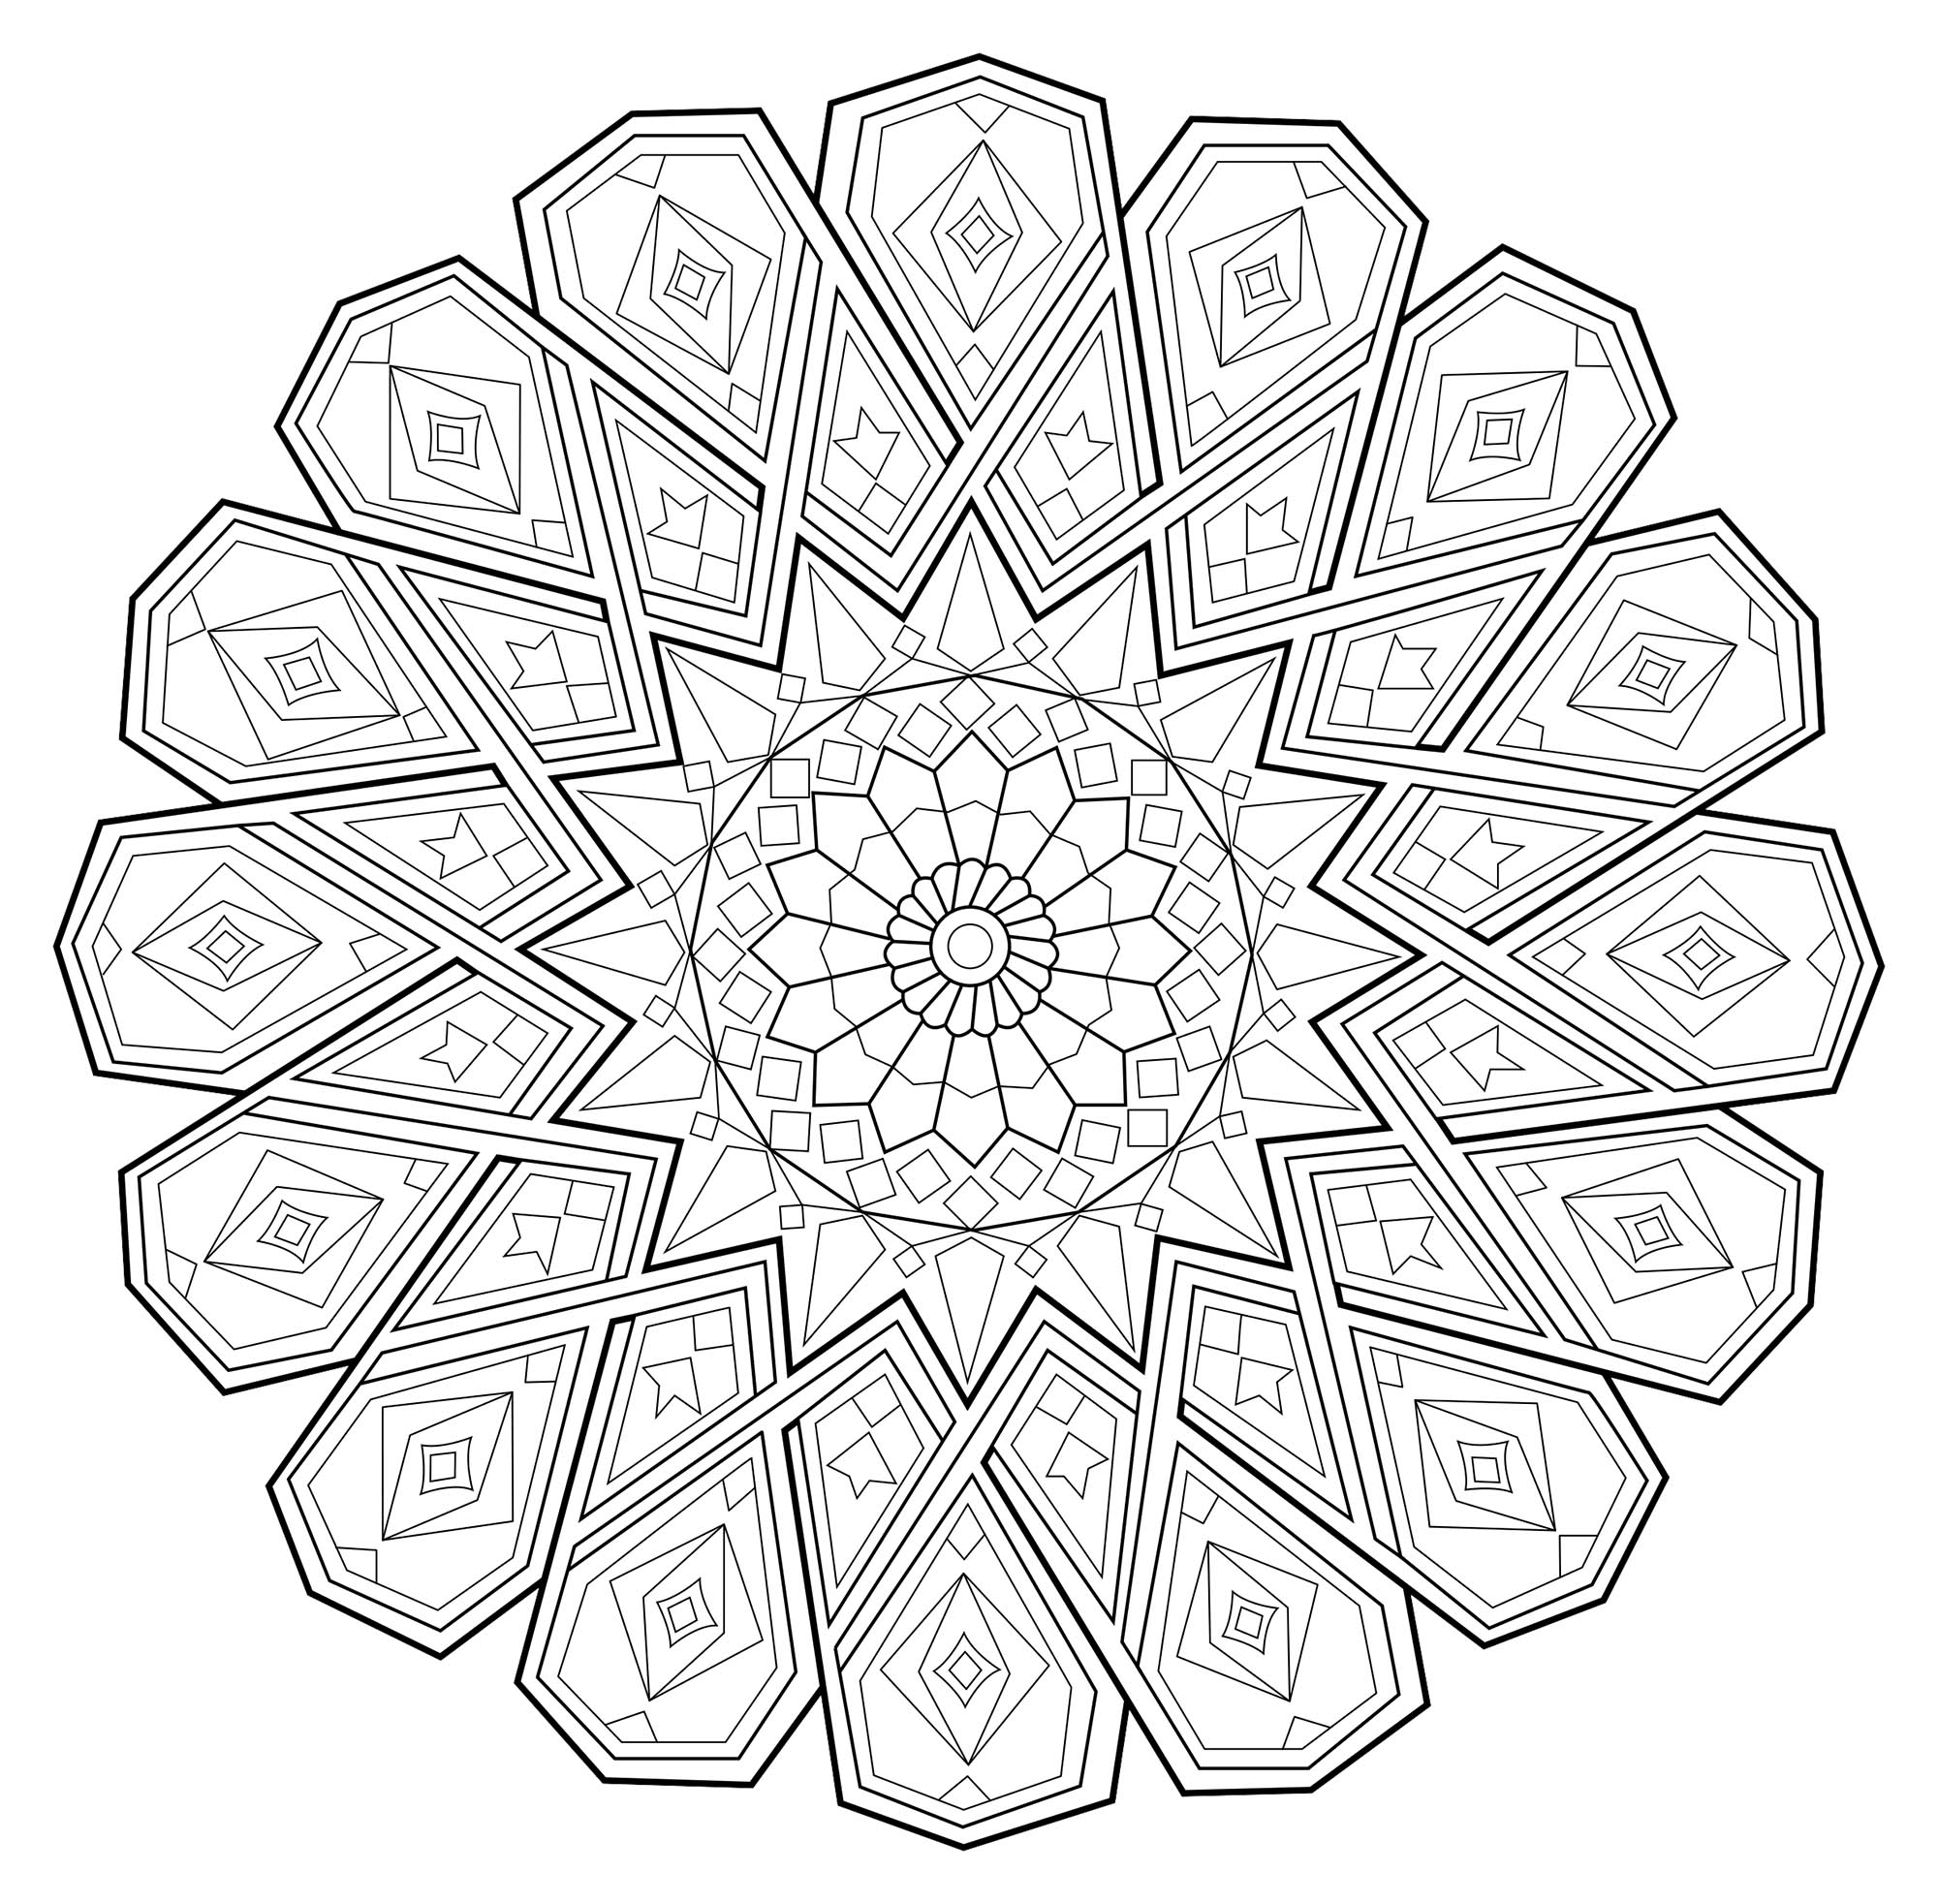 Relaxing Mandala with beautiful patterns - Difficult Mandalas (for adults)